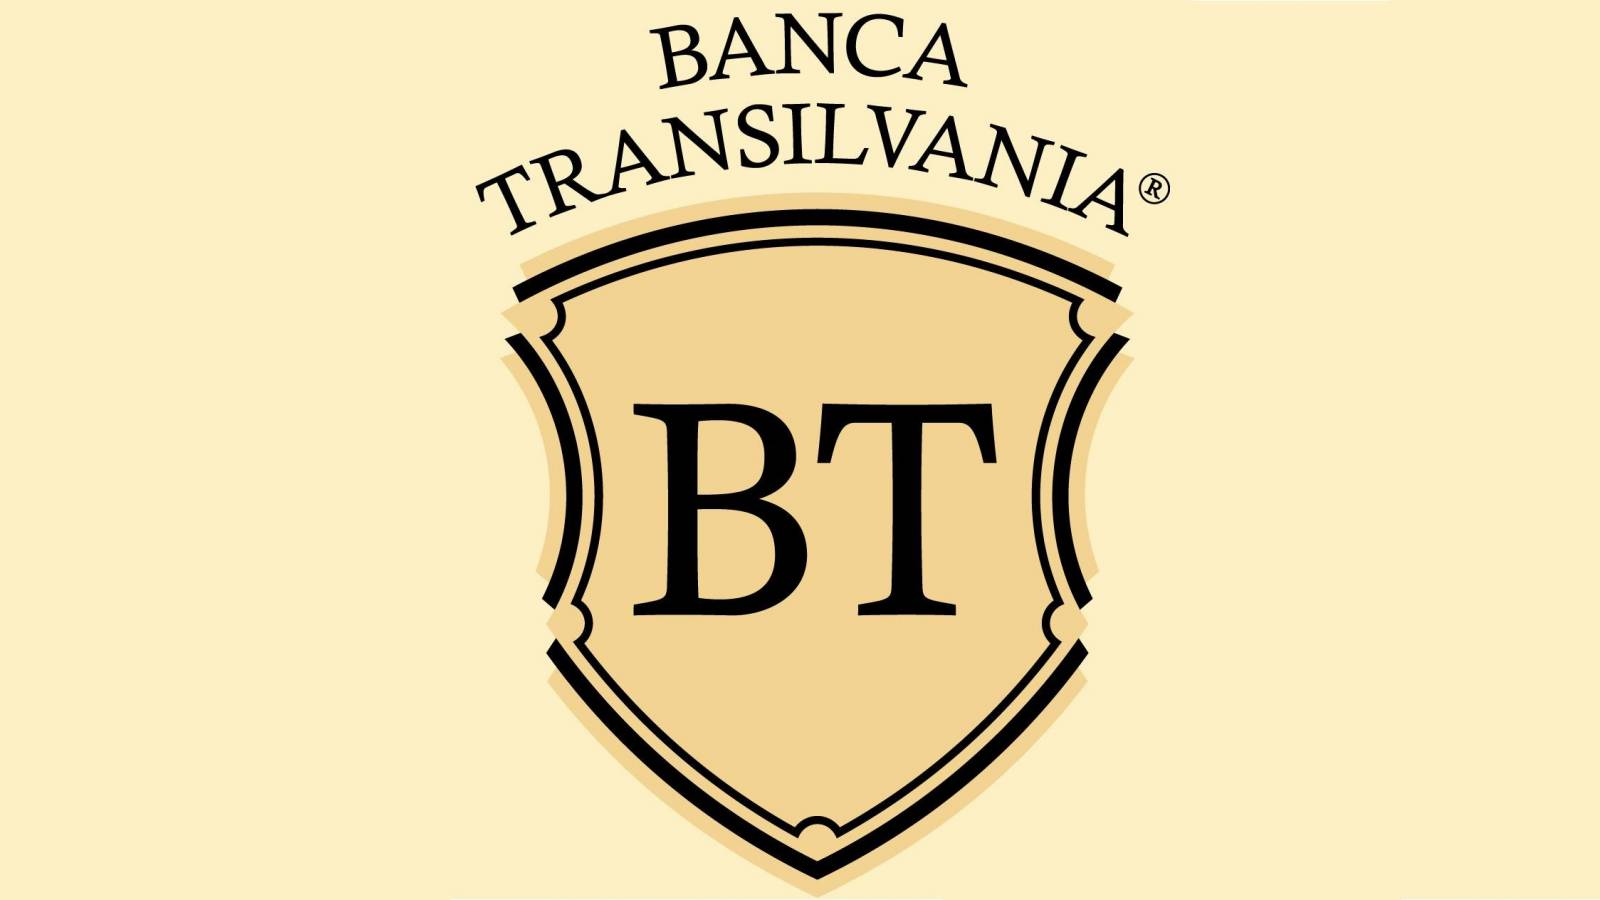 Wizualizacja BANCA Transilvania